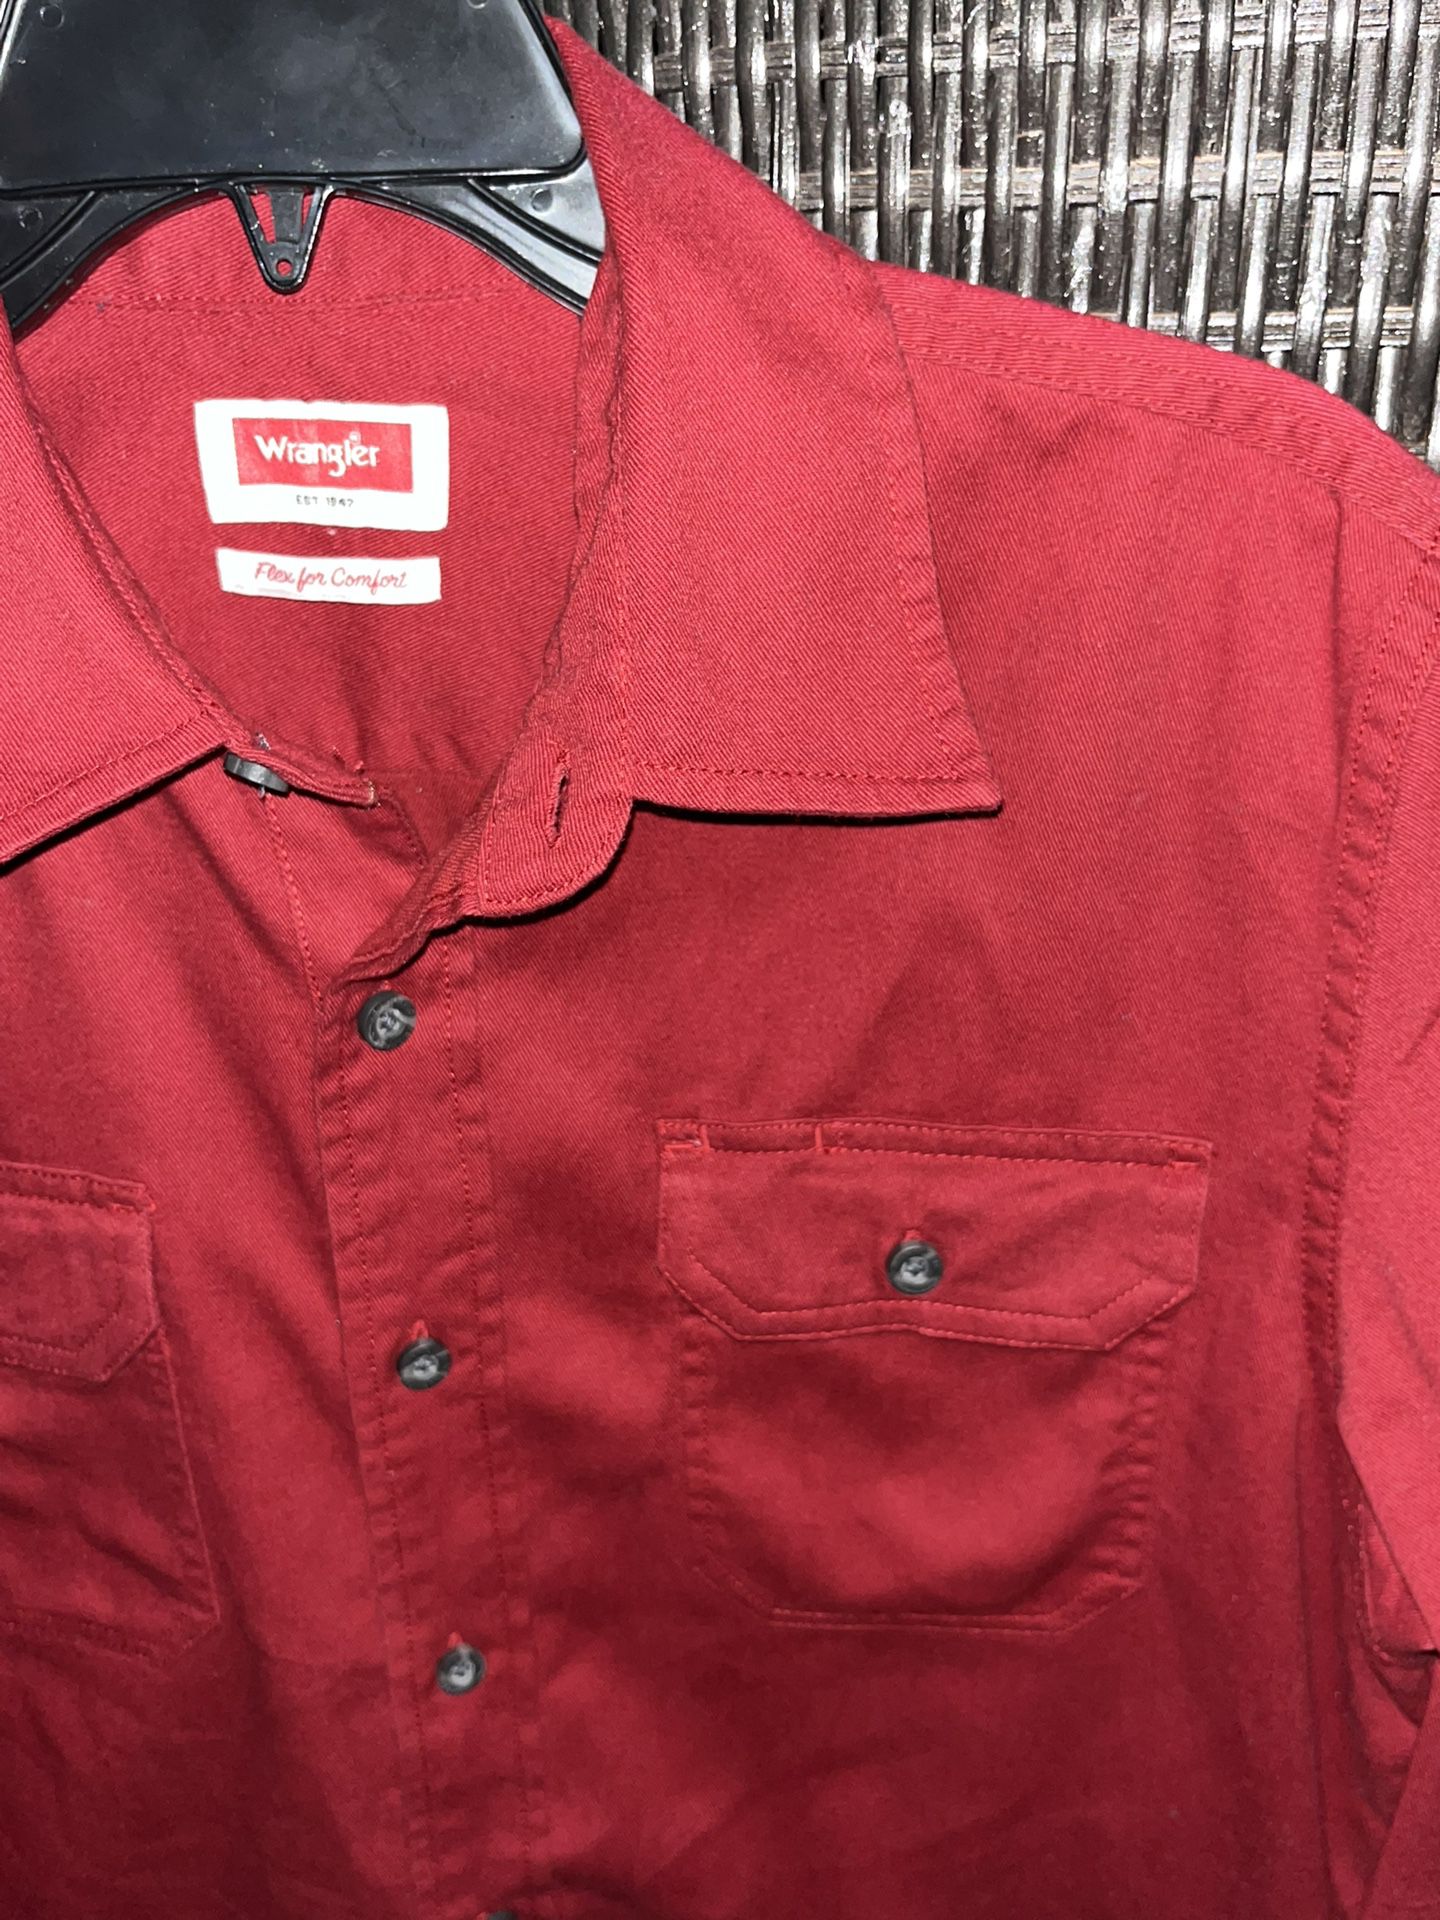 Mens Wrangler Shirt Small Red